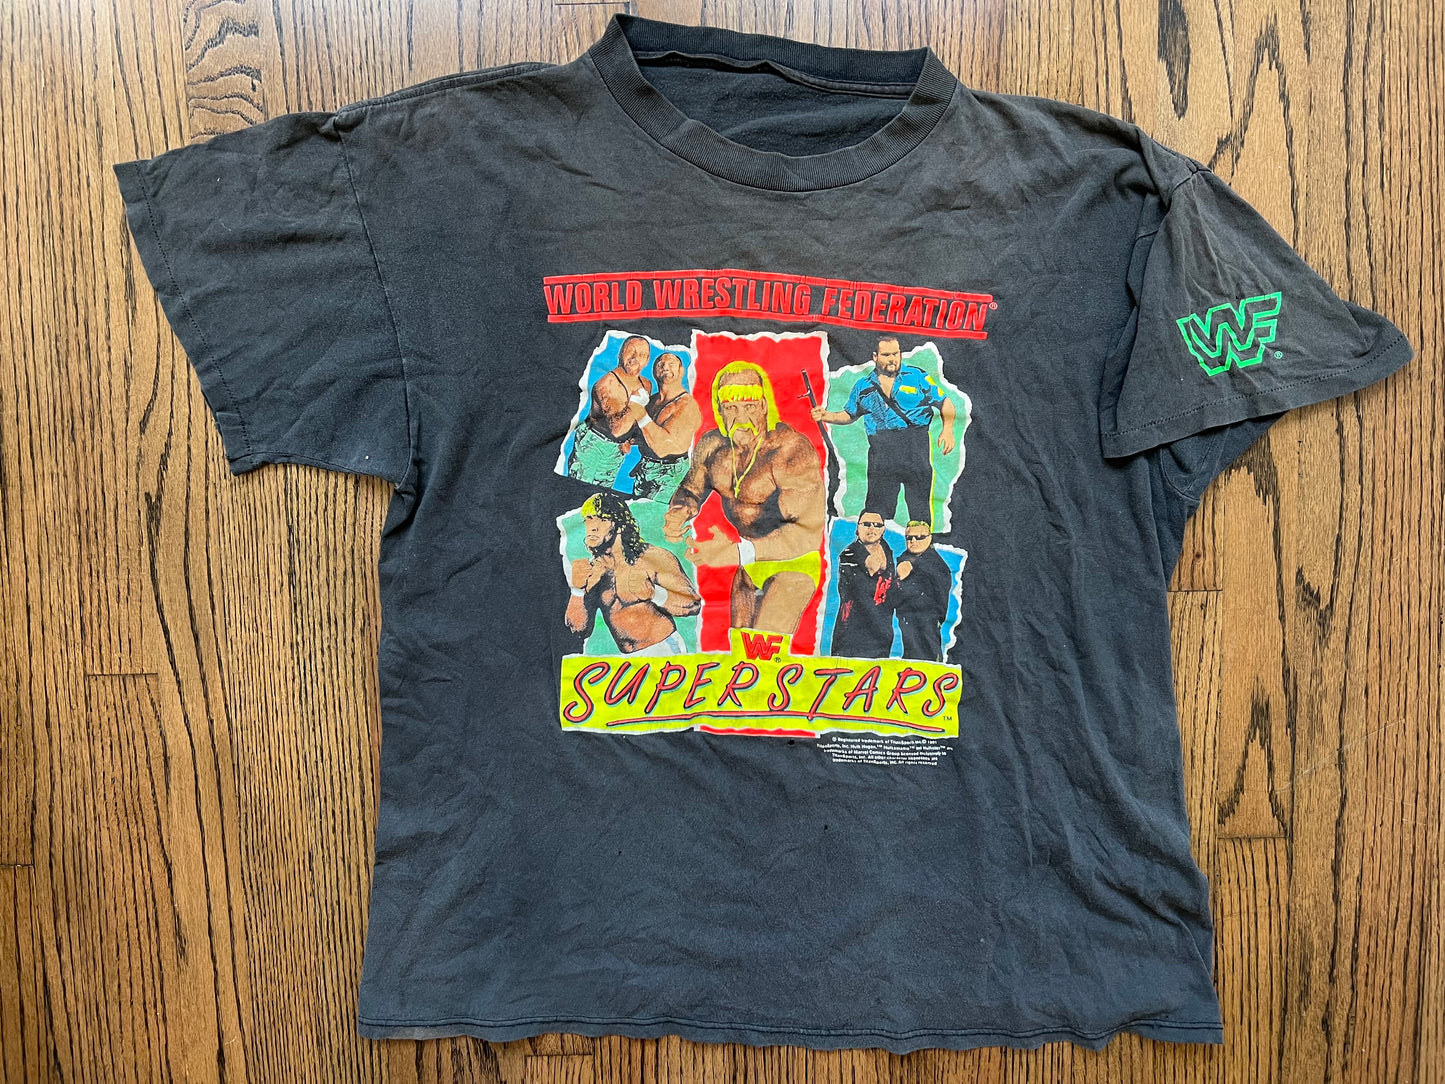 1991 WWF Superstars shirt featuring “The Immortal” Hulk Hogan, “The Texas Tornado” Kerry Von Erich, Big Boss Man, The Bushwhackers and The Nasty Boys